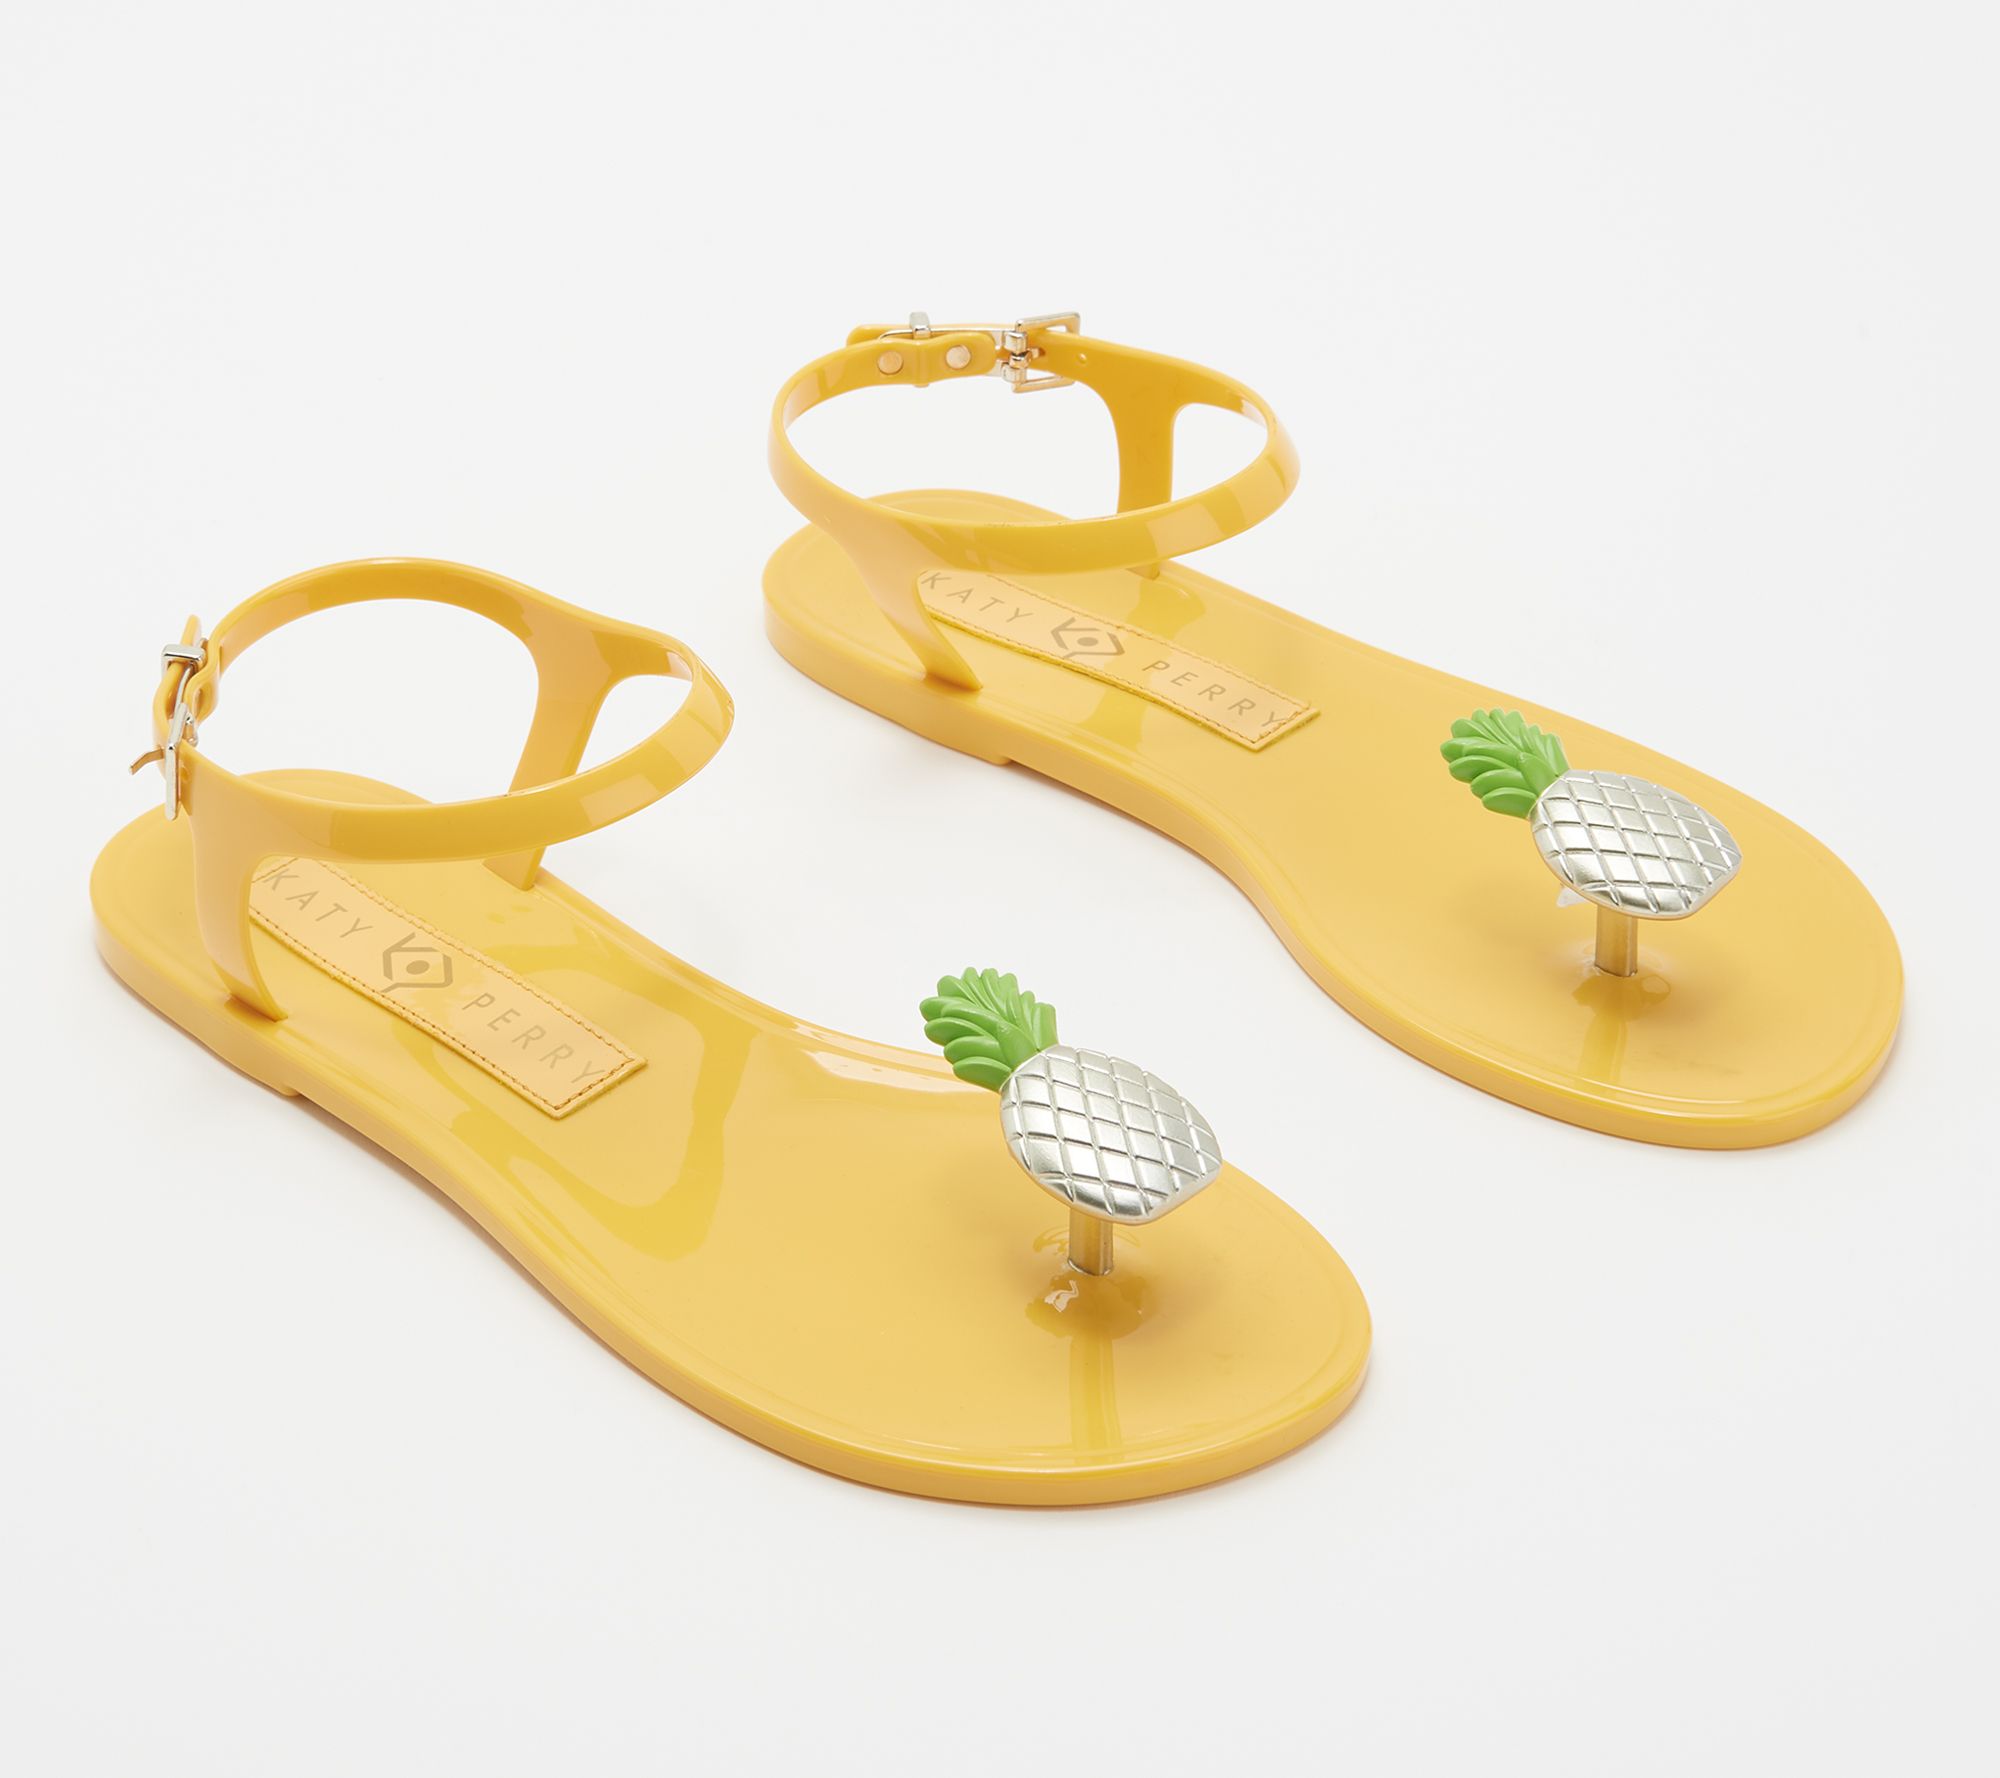 katy perry jelly sandals amazon